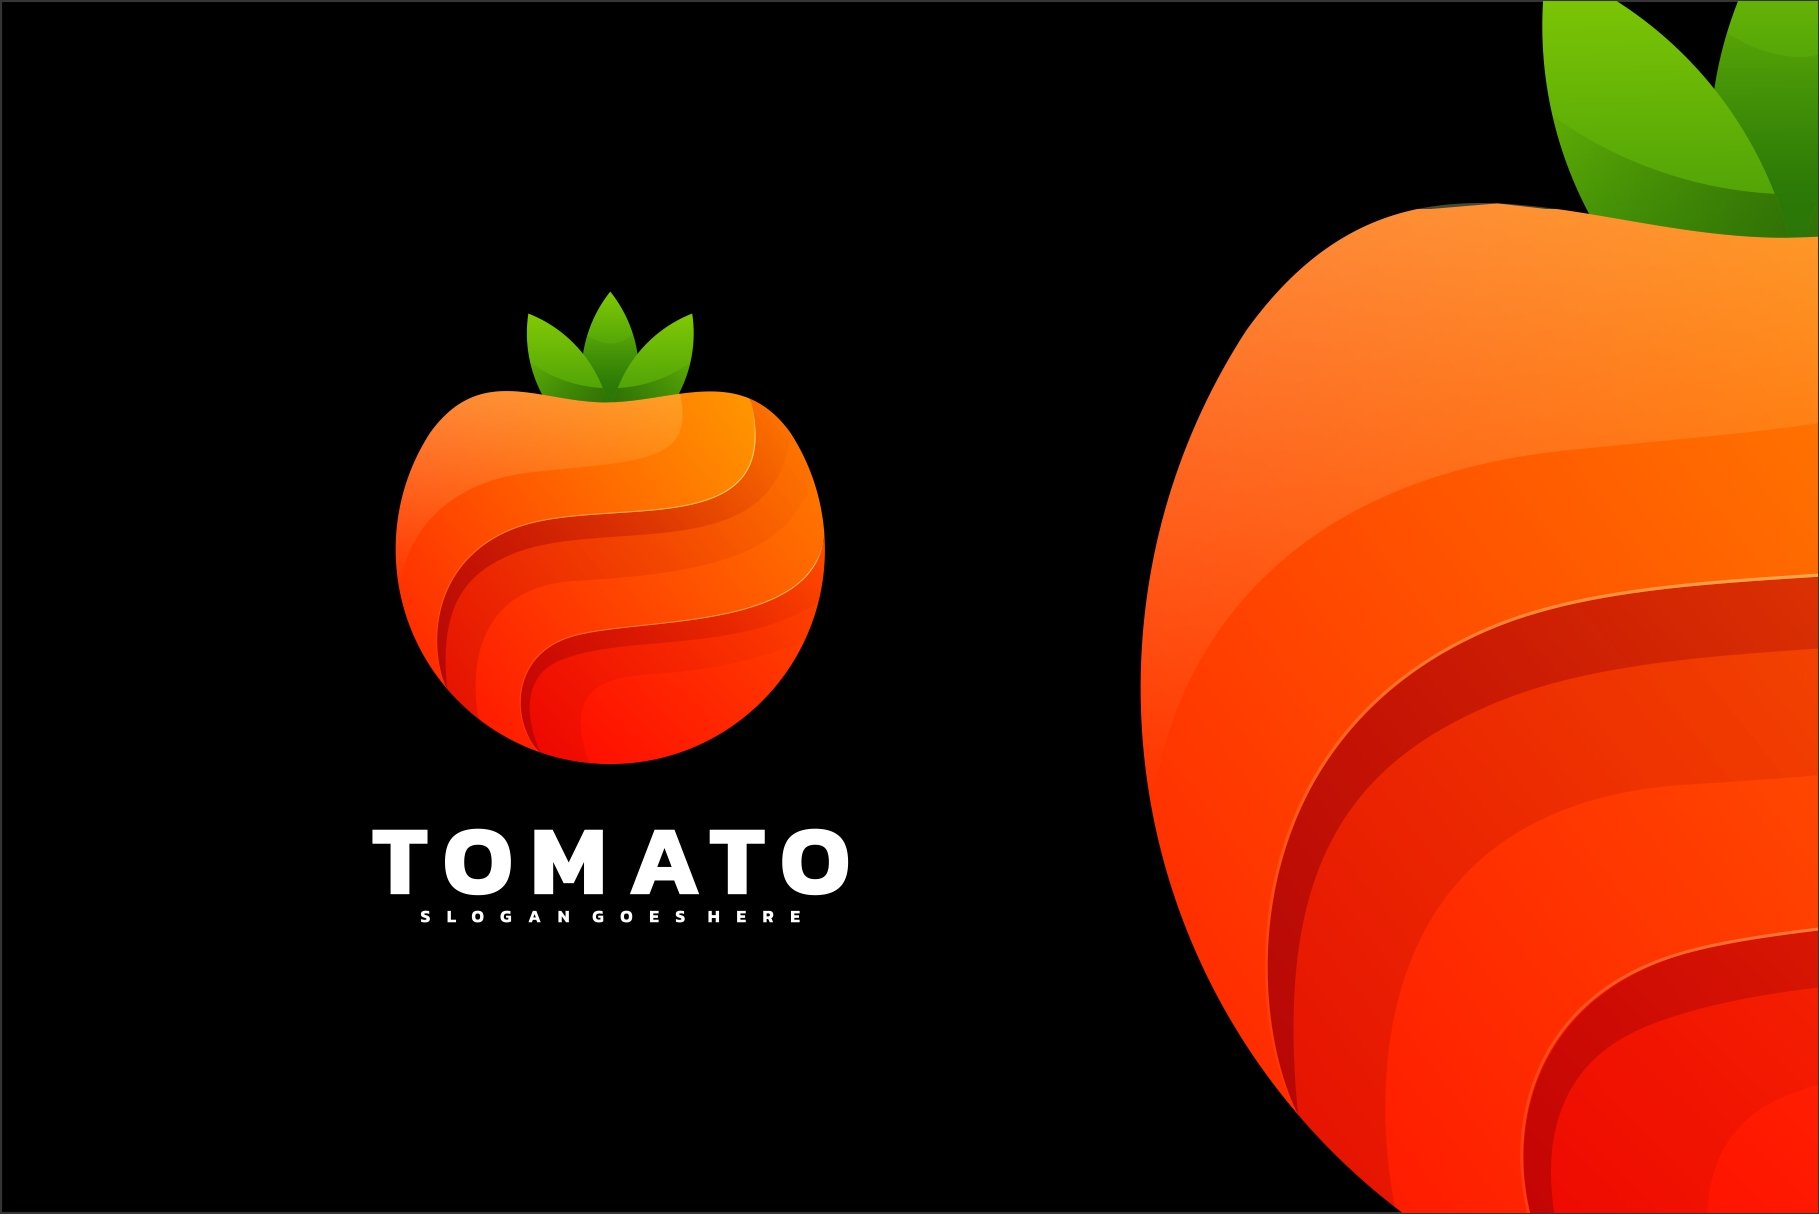 Tomato Gradient Logo cover image.